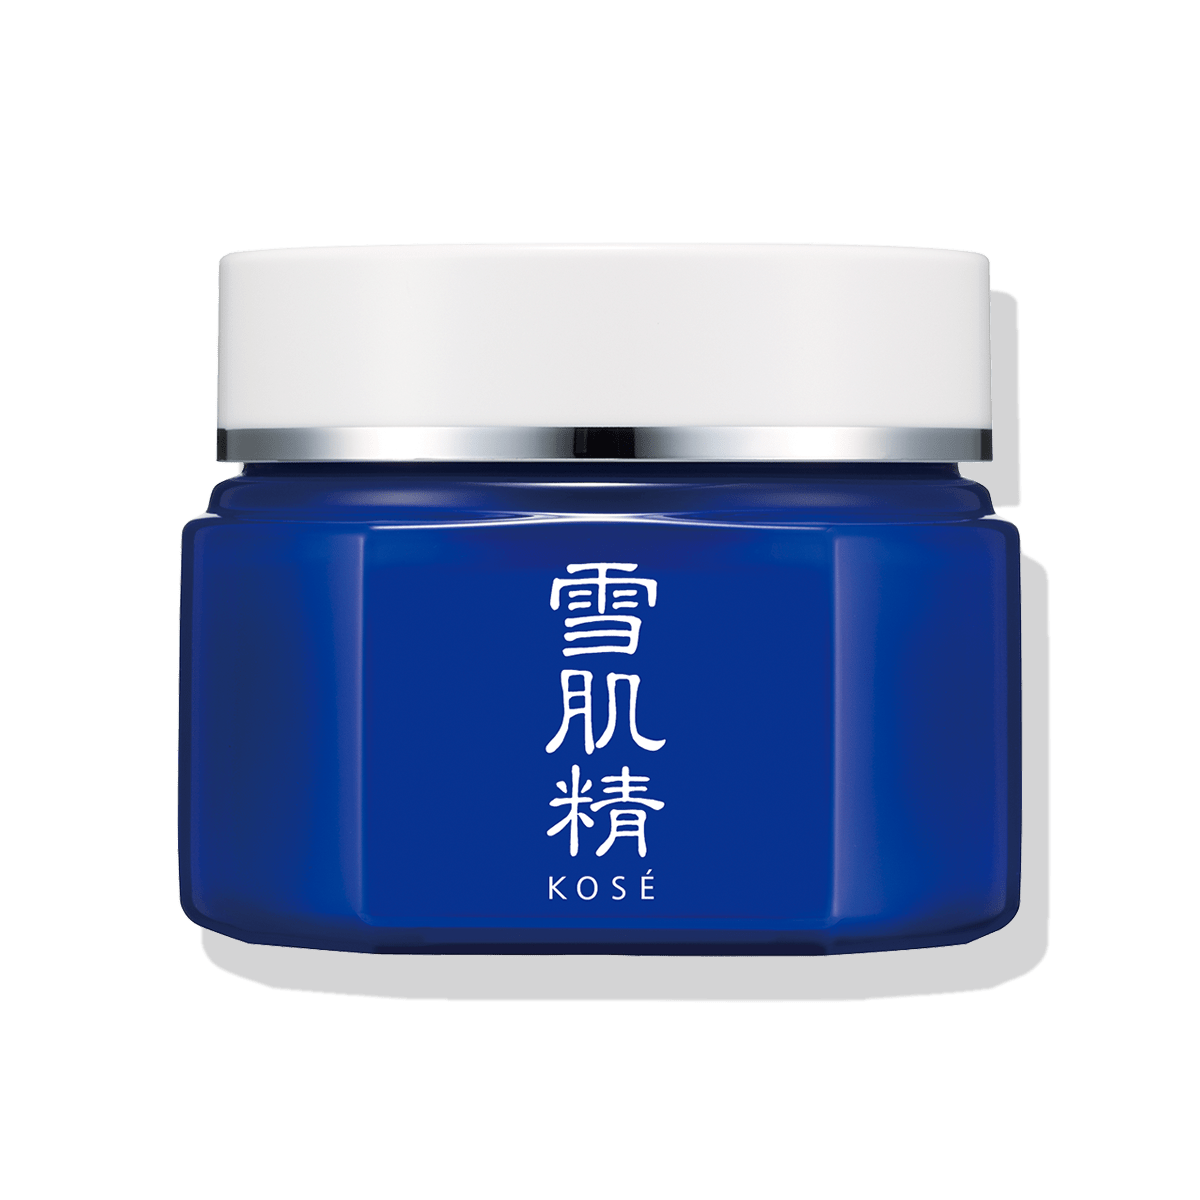 Kose Sekkisei Cleansing Cream очищуючий крем для зняття макіяжу з оліями та екстрактами, 140 мл